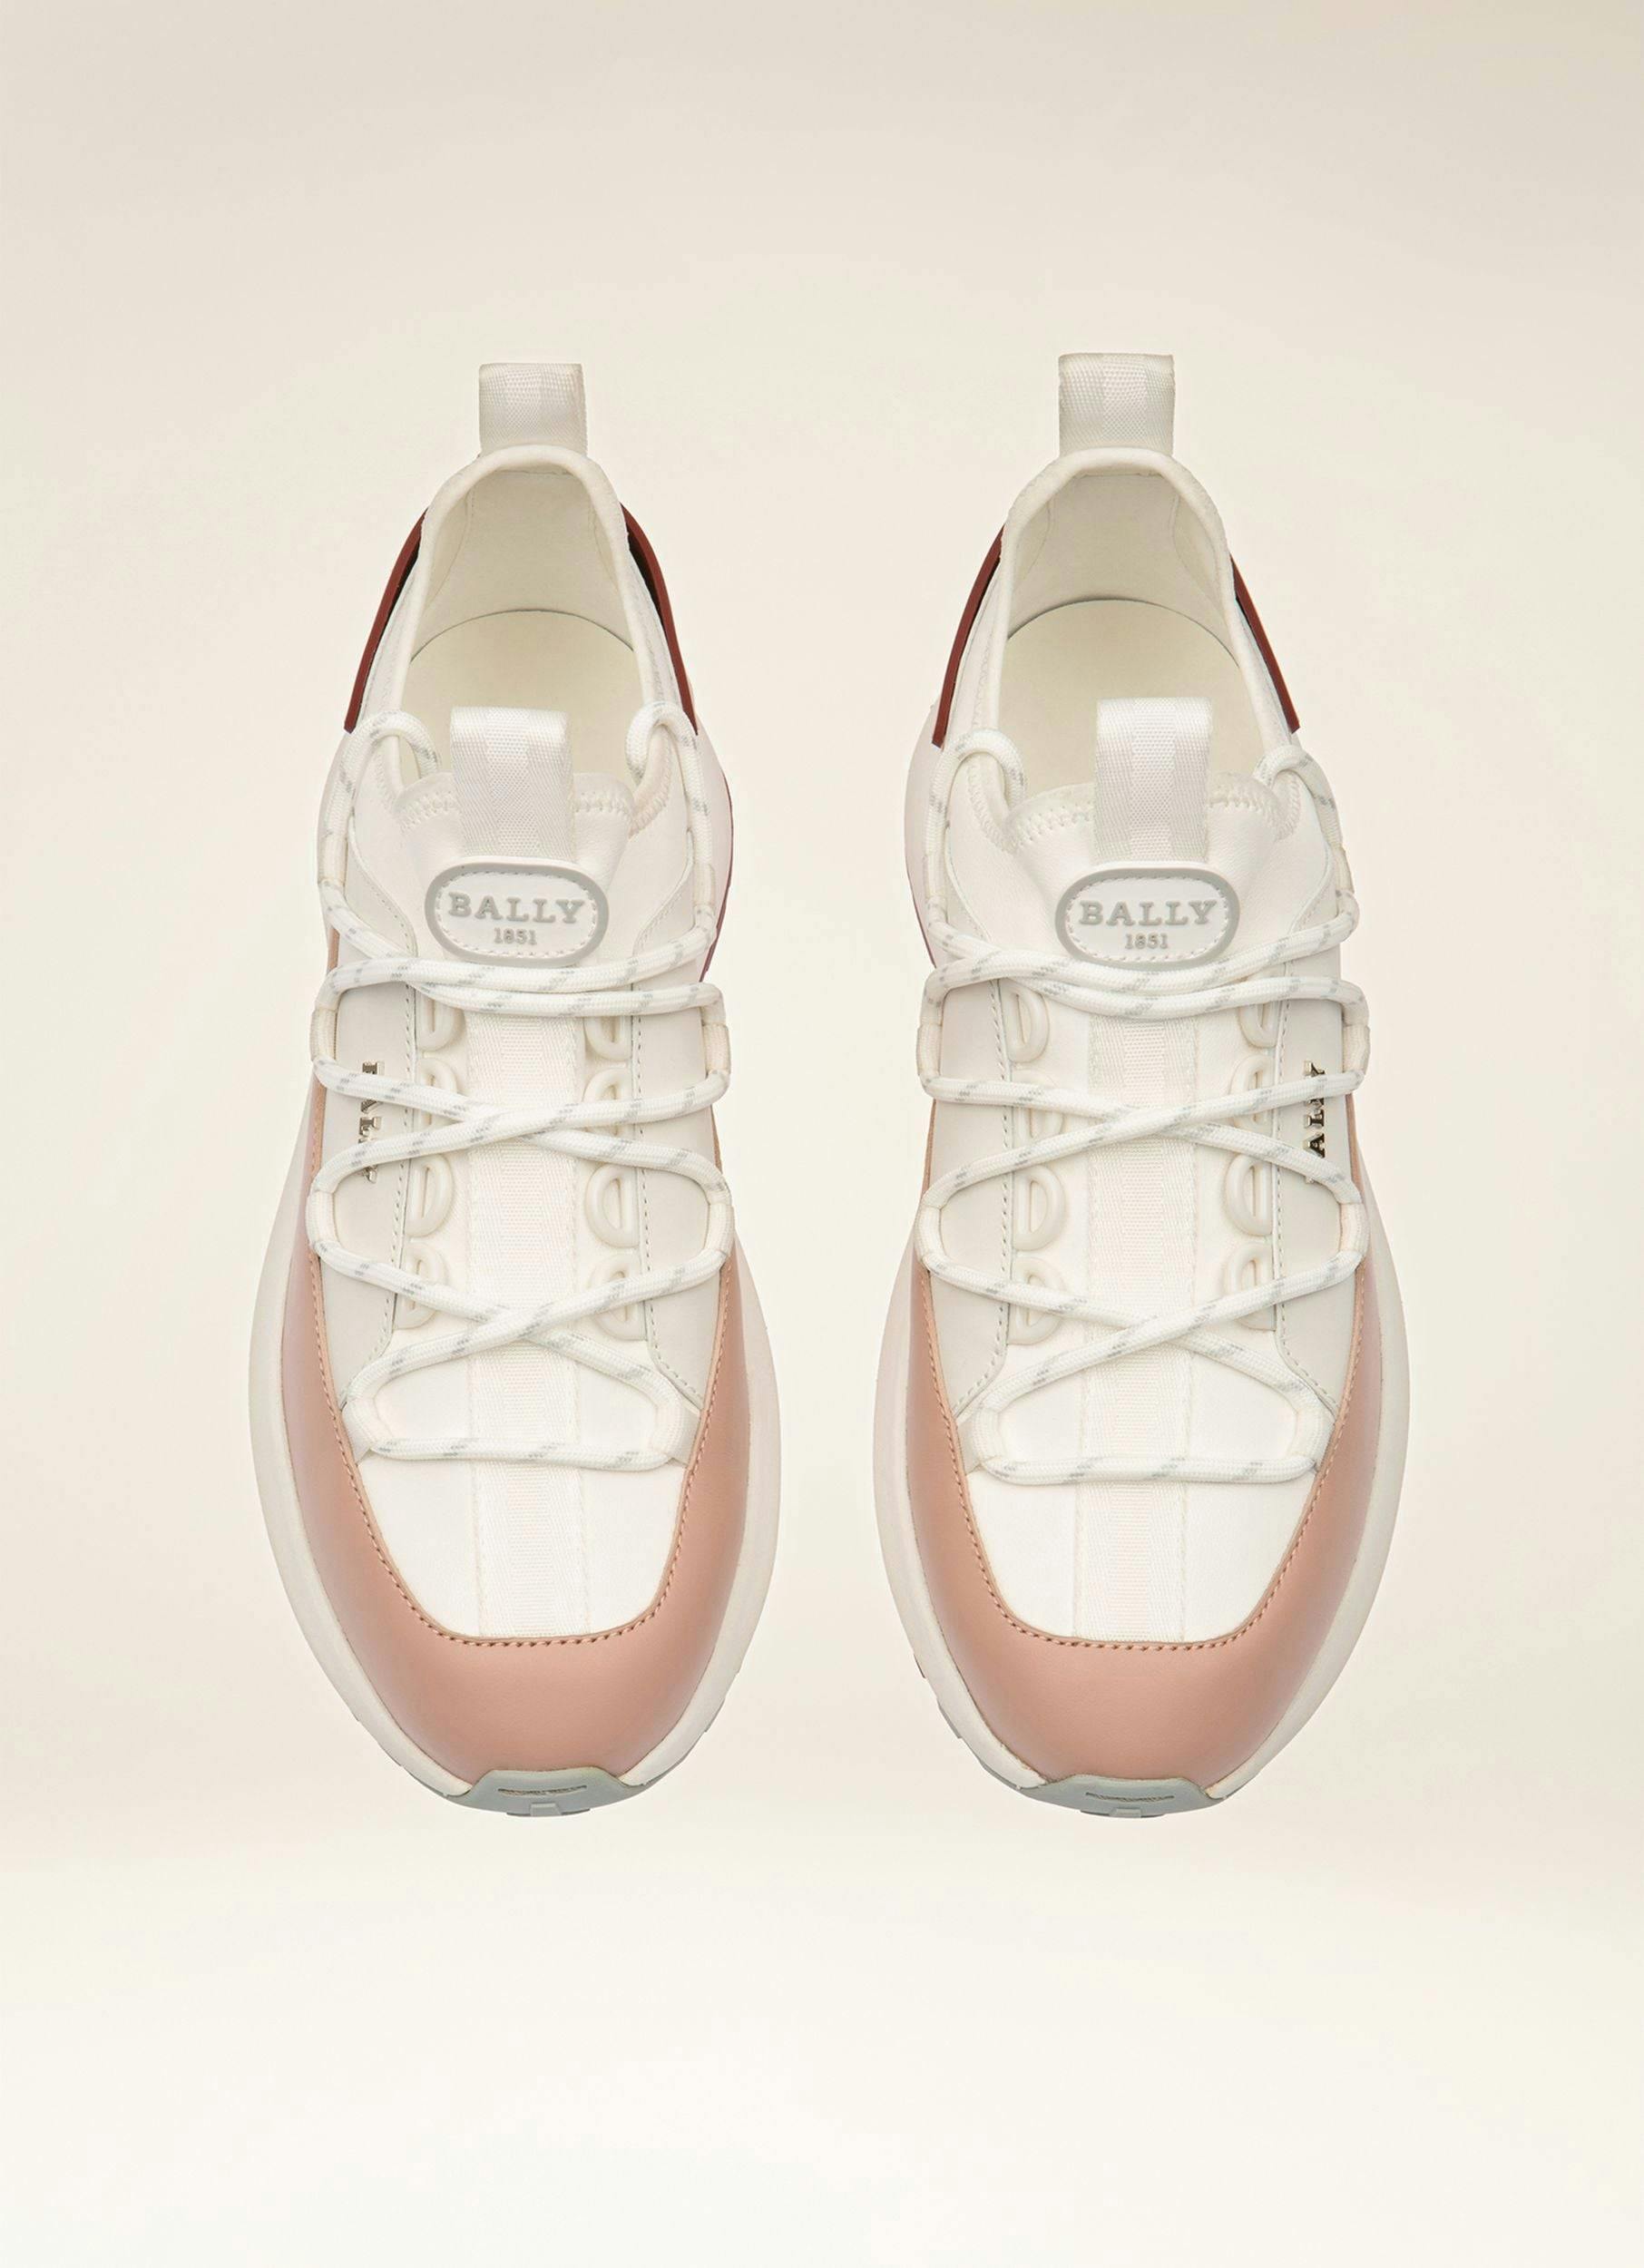 Delys Sneakers En Cuir Blanc Et Rose - Femme - Bally - 04